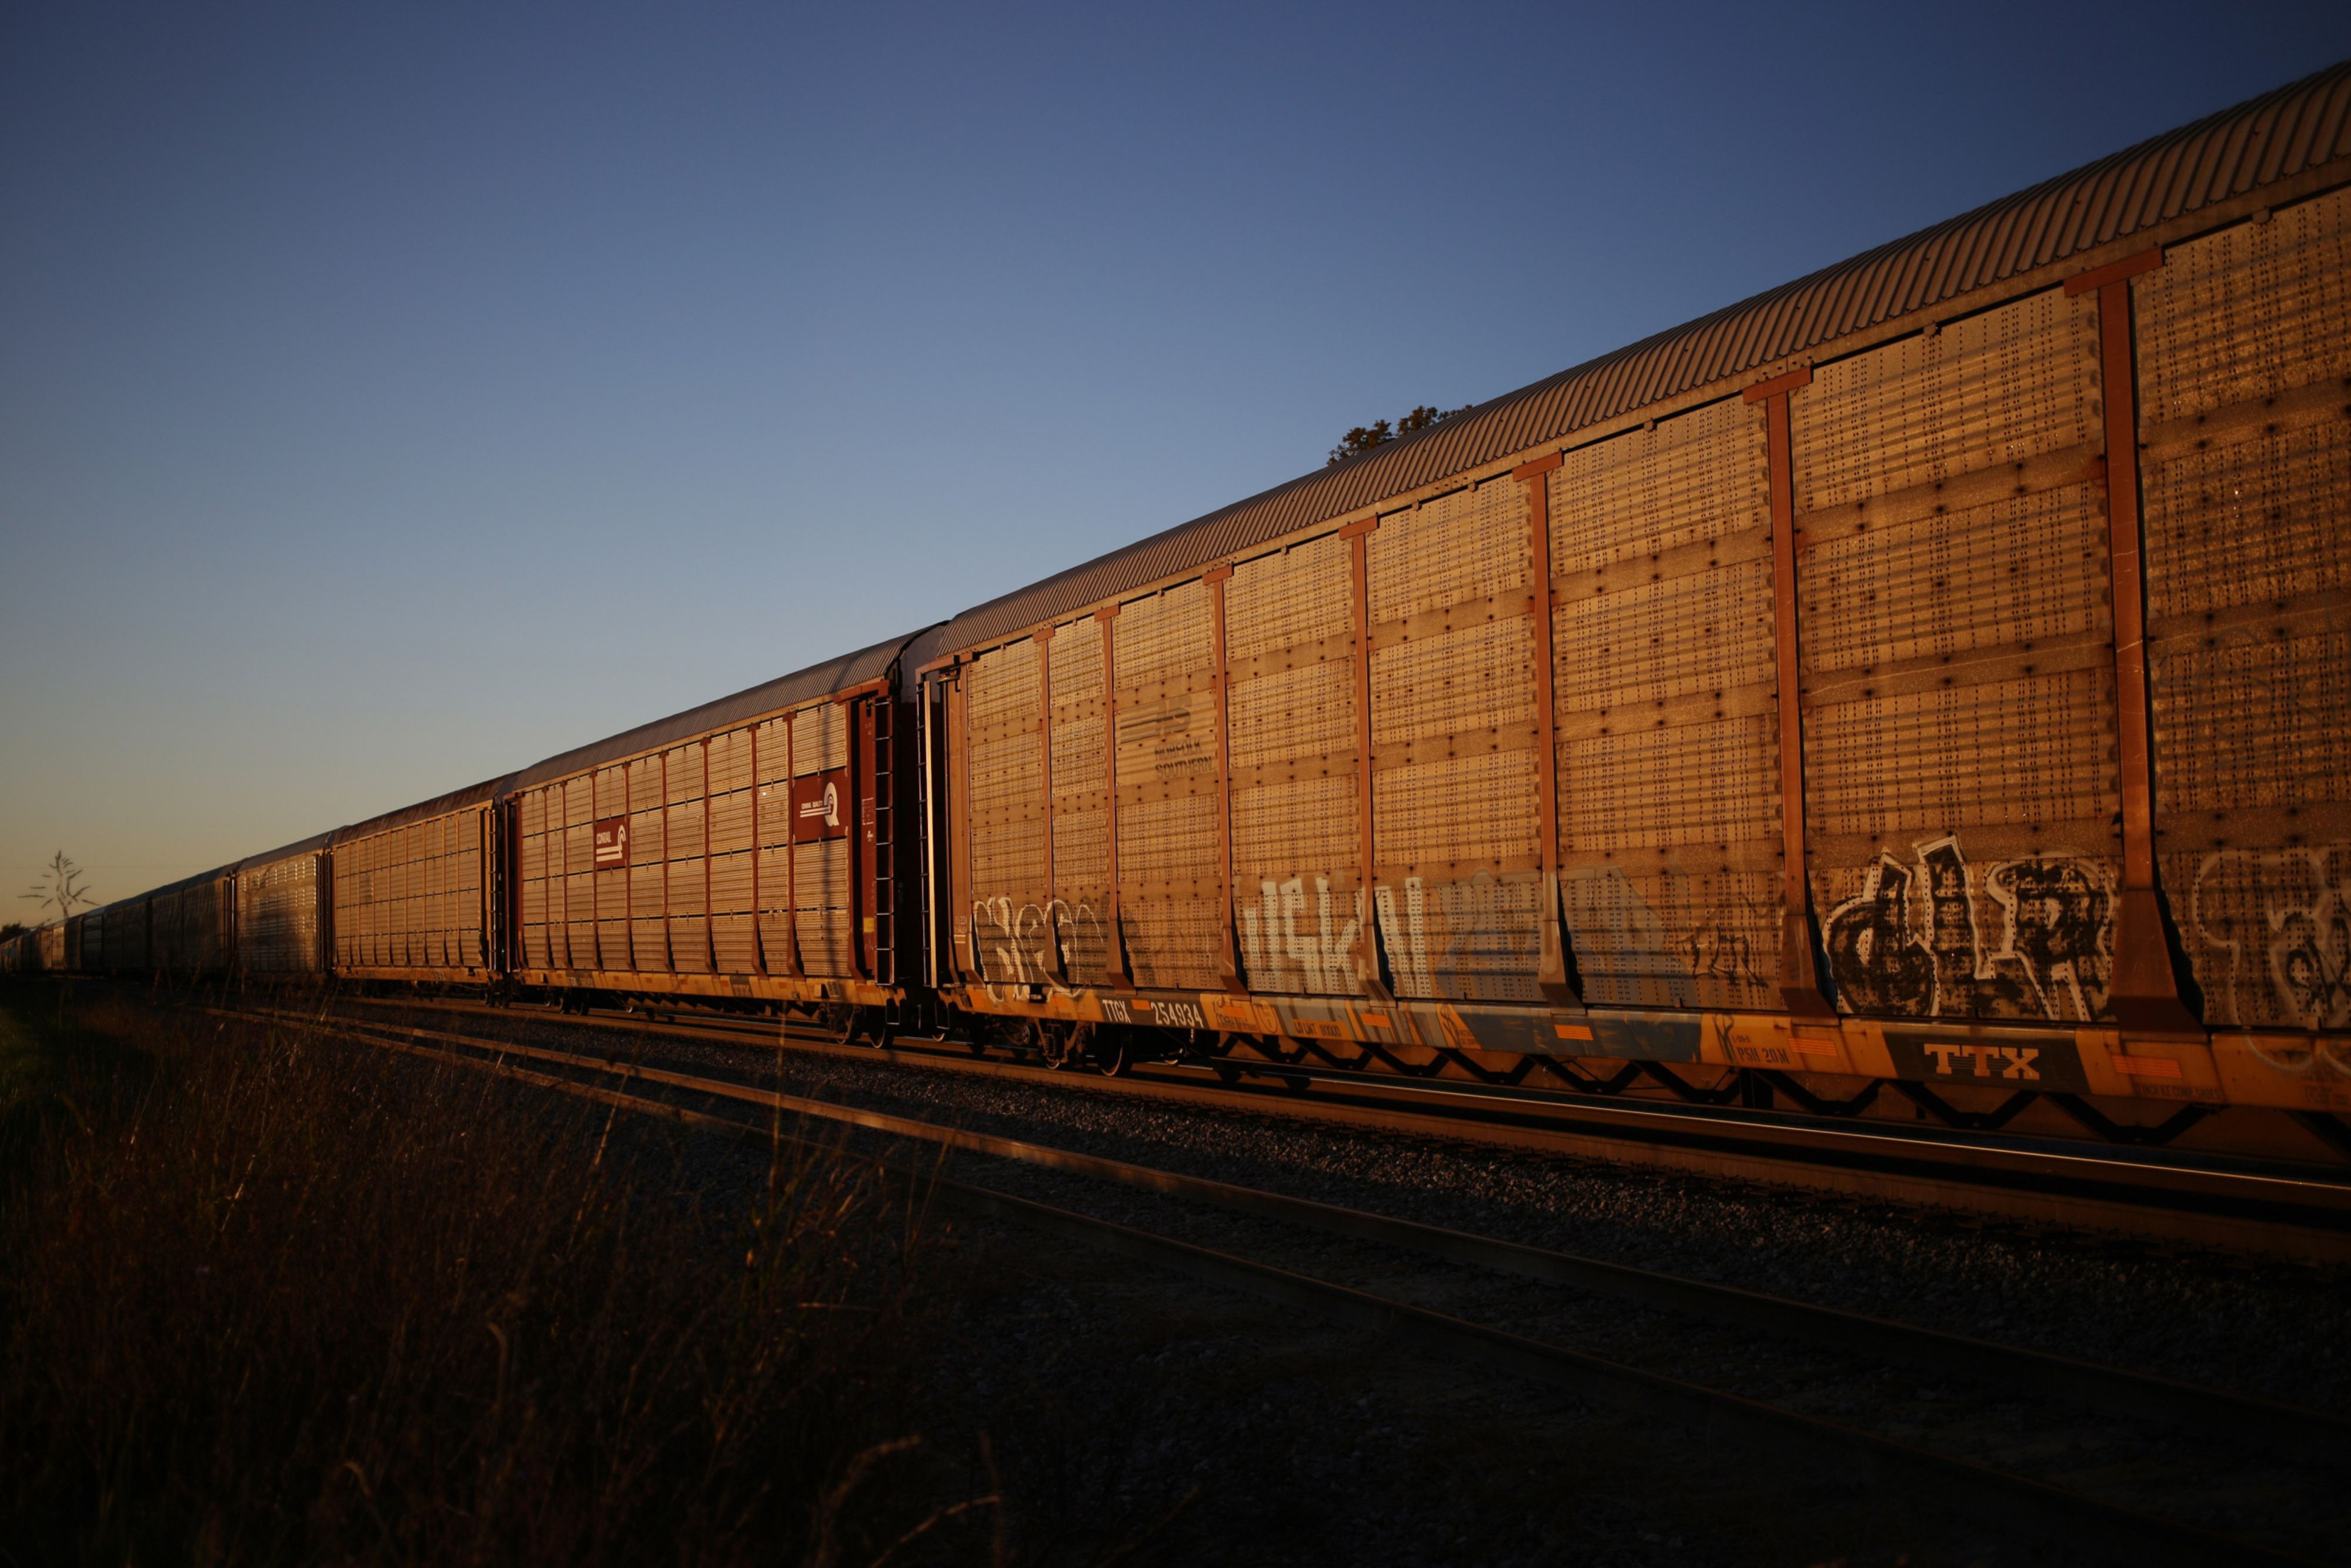 Crop, car shipments set to halt on US rail strike threat